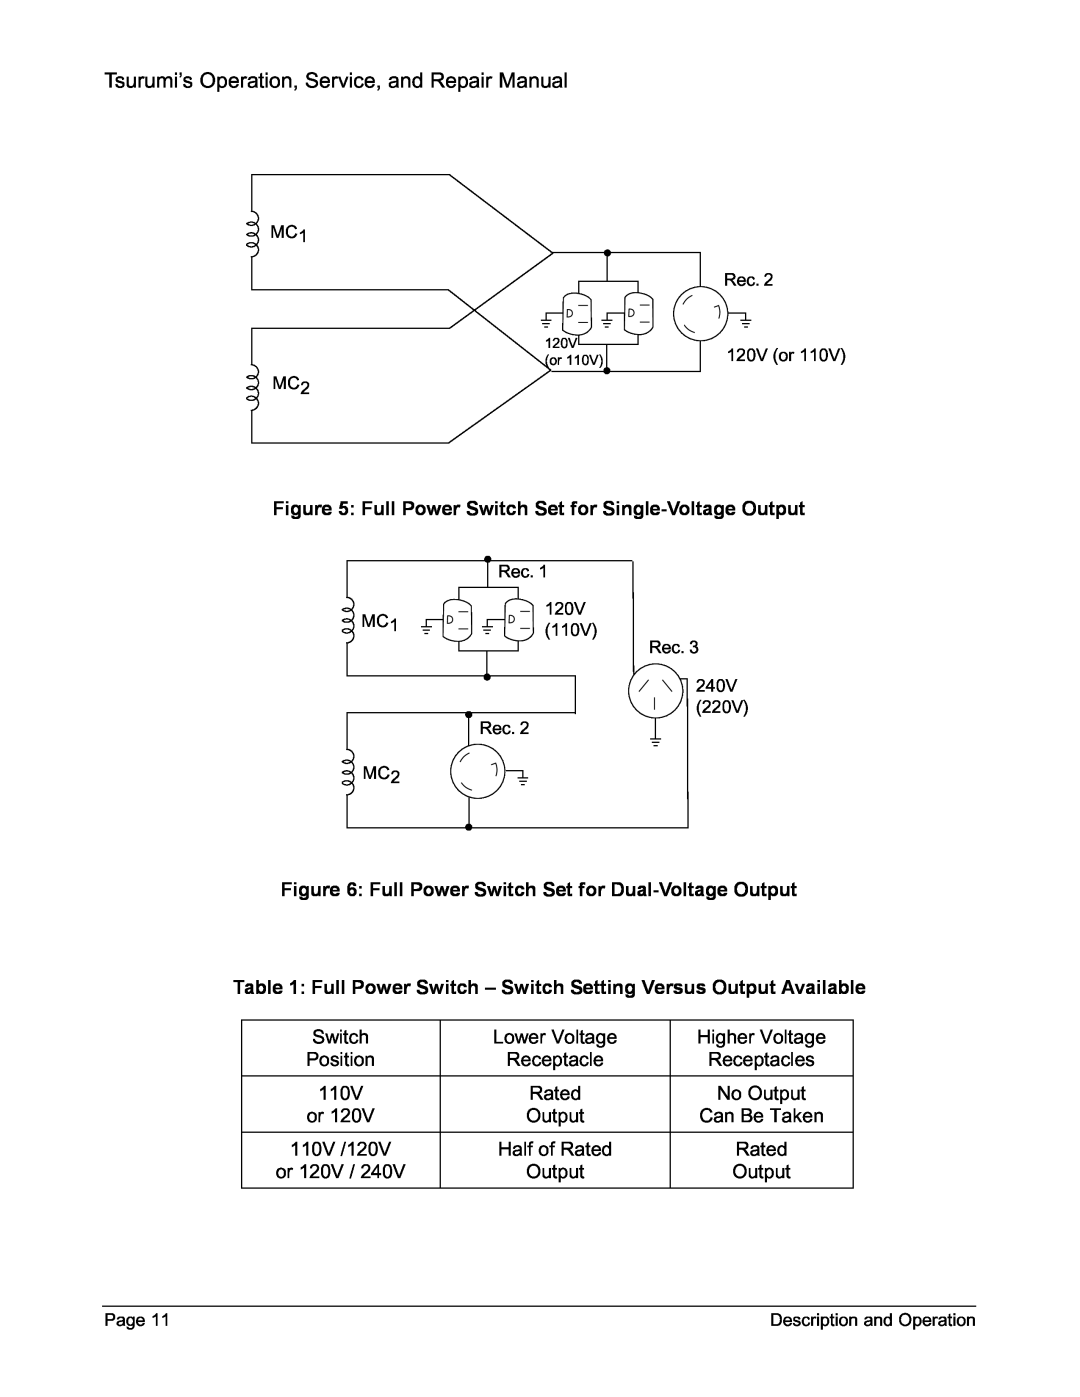 Honda Power Equipment TPG-6000H-DX, TPG-2900H-DX, TPG-7000H-DXE Tsurumi’s Operation, Service, and Repair Manual, Switch 